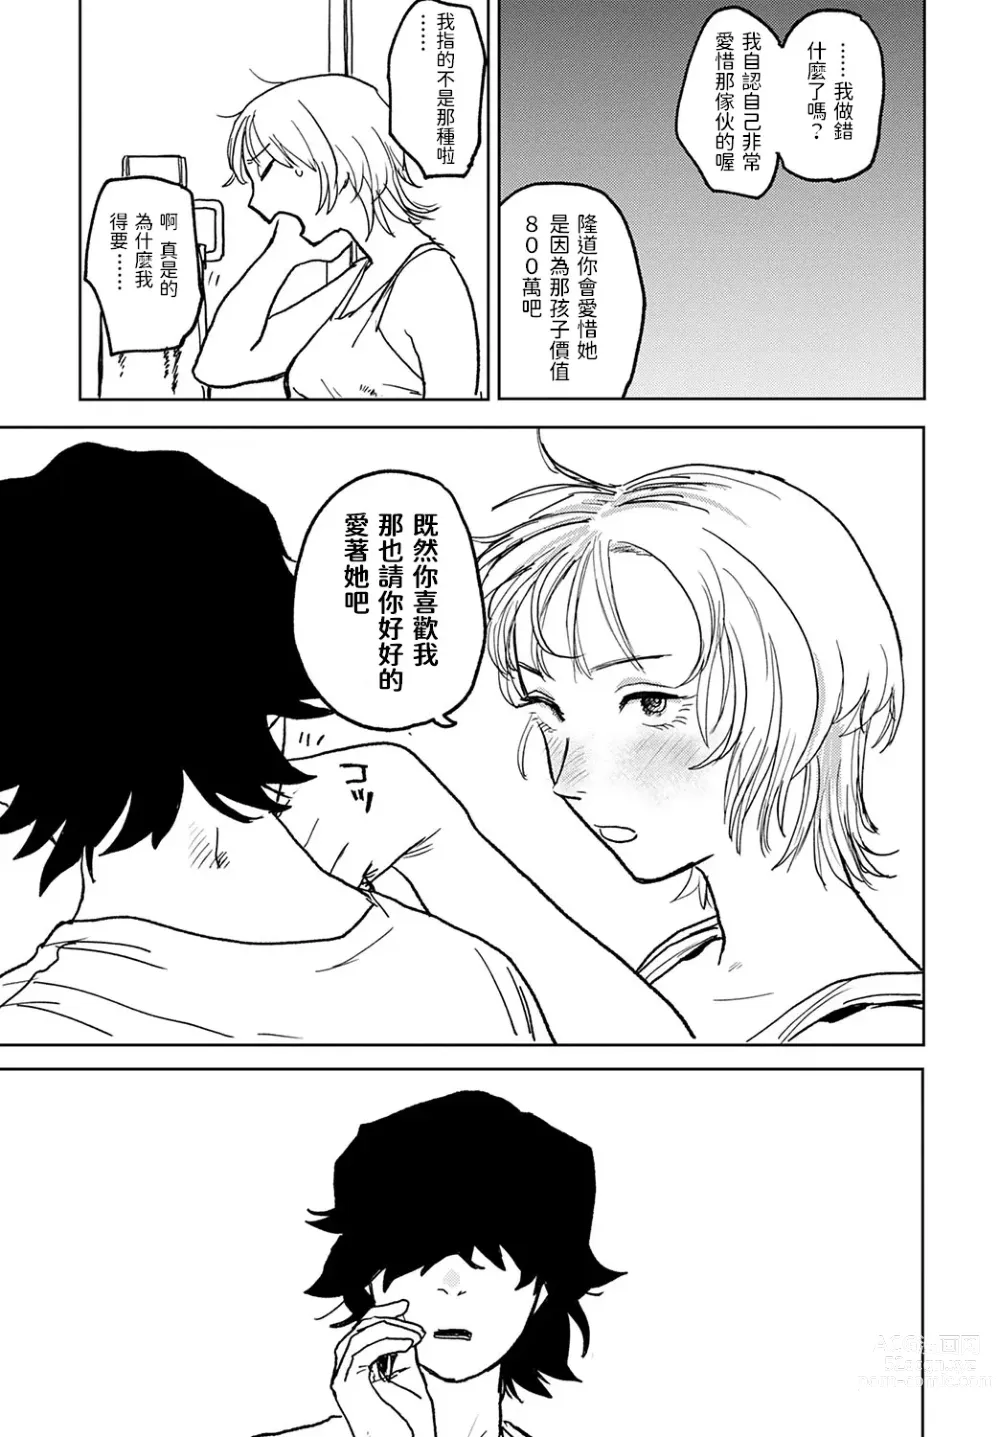 Page 19 of manga better than sex vol. 5